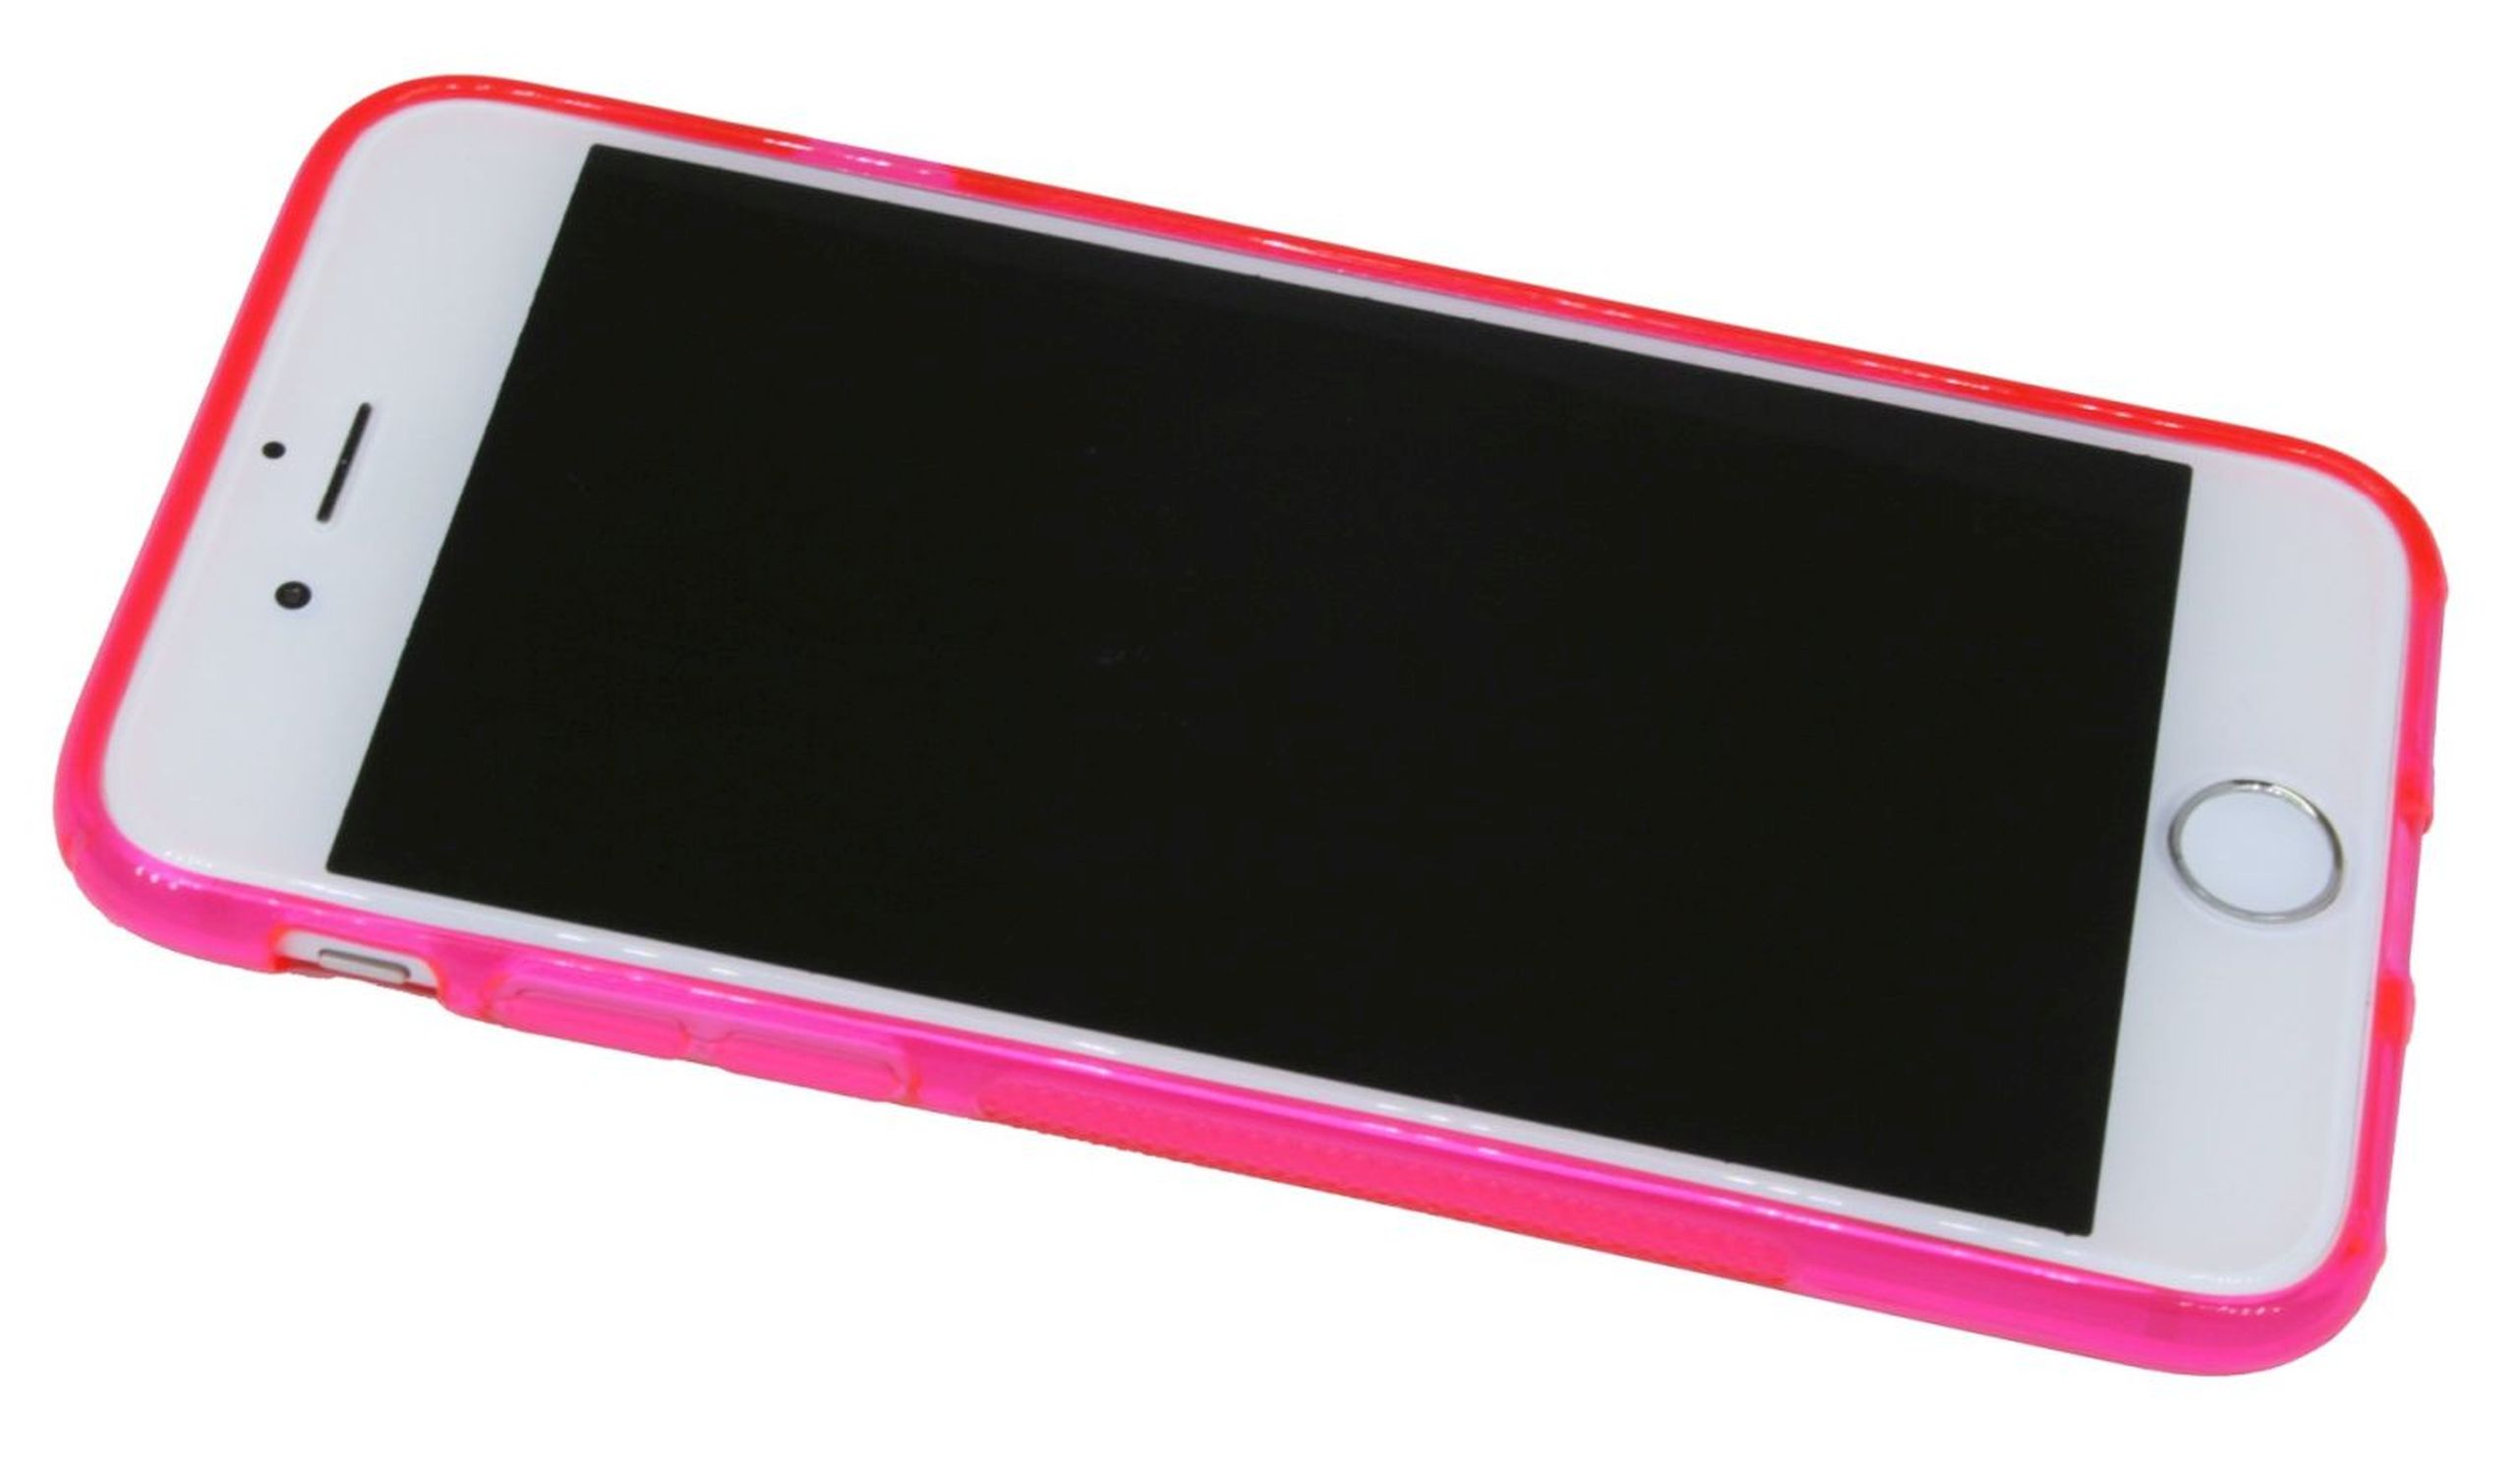 COFI 7, Bumper, iPhone Cover, S-Line Pink Apple,